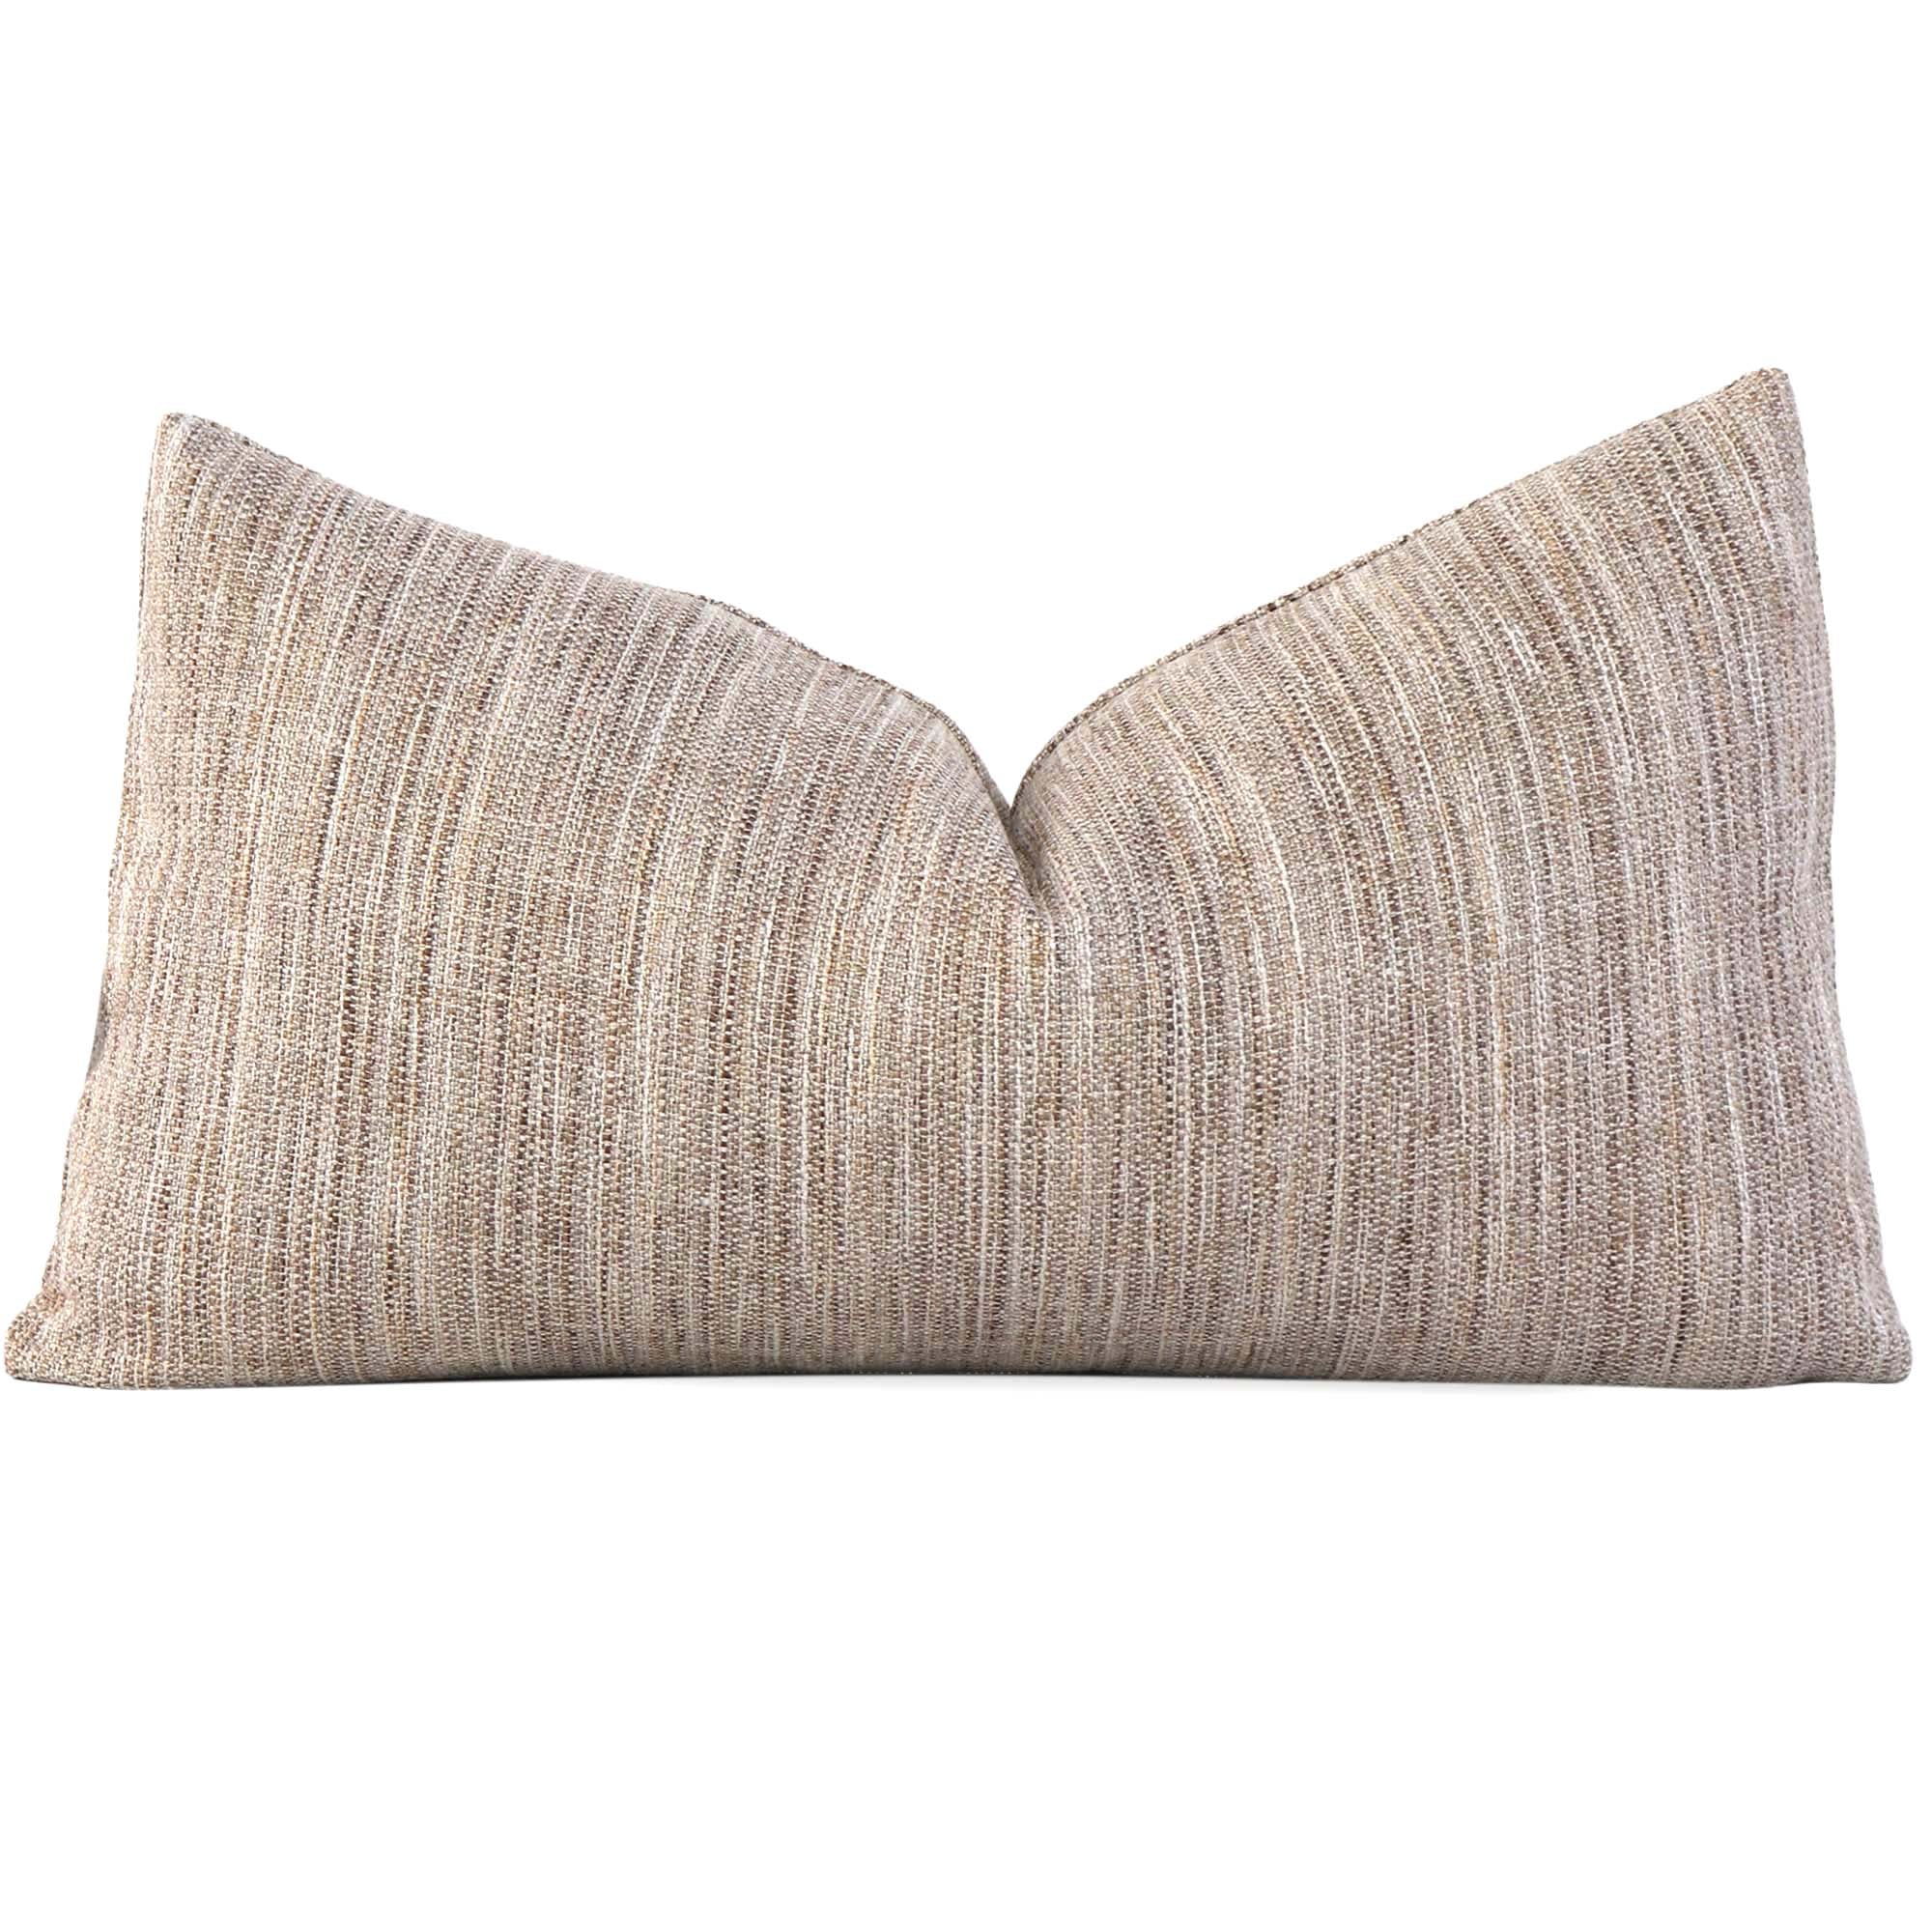 Schumacher Formentera Performance Sand Textured Tweed Designer Decorative Lumbar Throw Pillow Cover